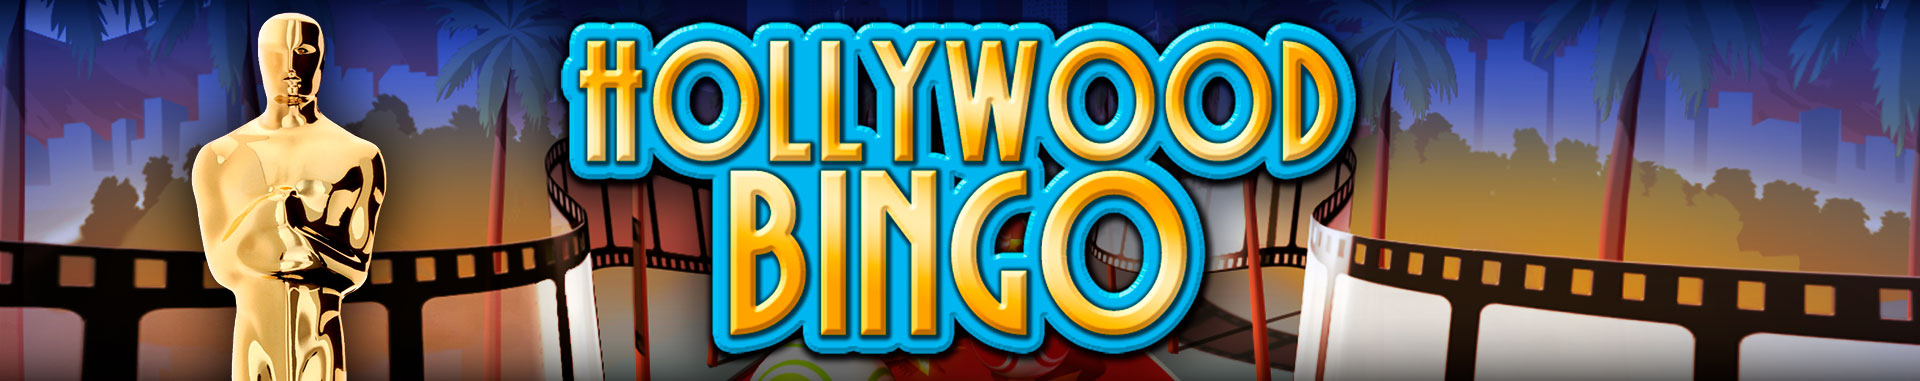 Video Bingo Online Hollywood